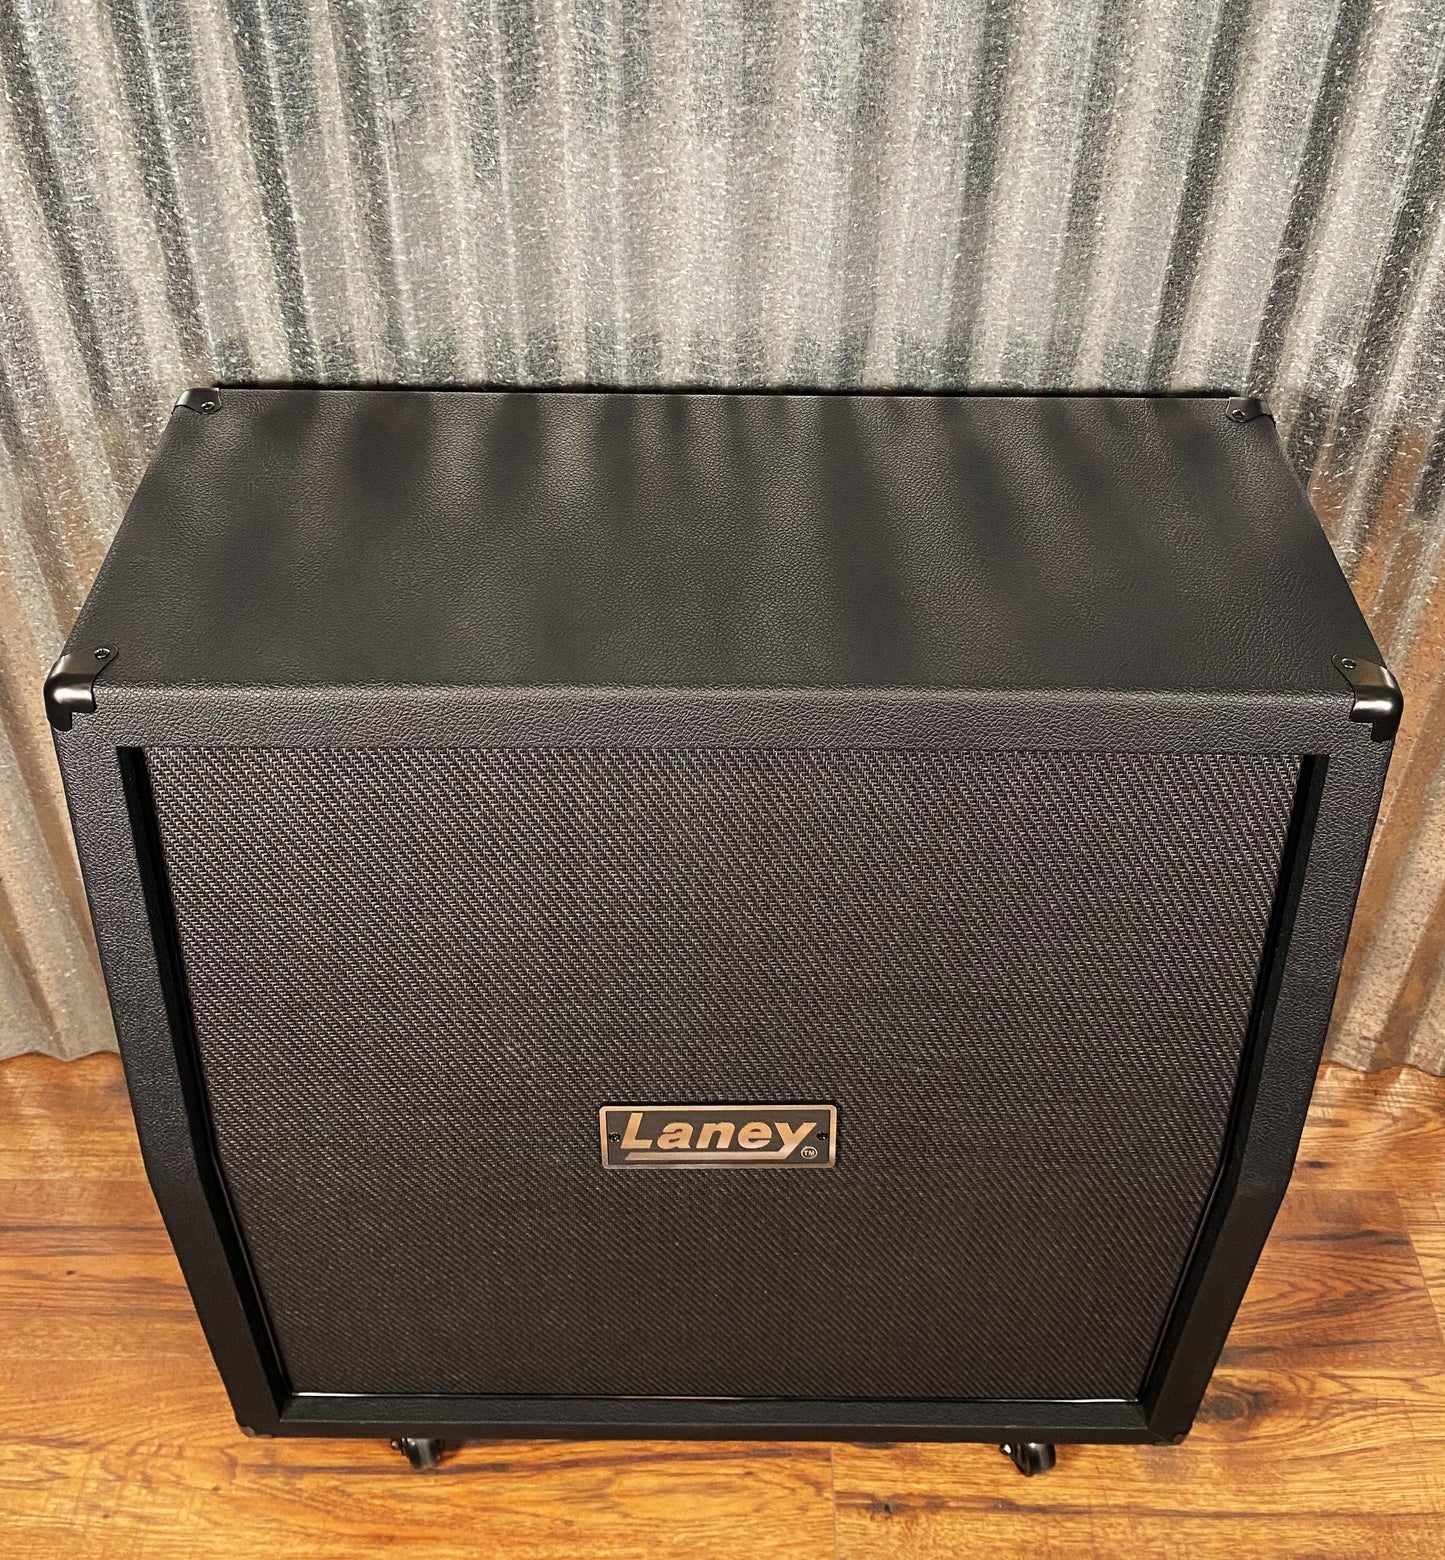 Laney GS412IA 4x12" 320 Watt Angled Guitar Amplifier Extension Speaker Cabinet